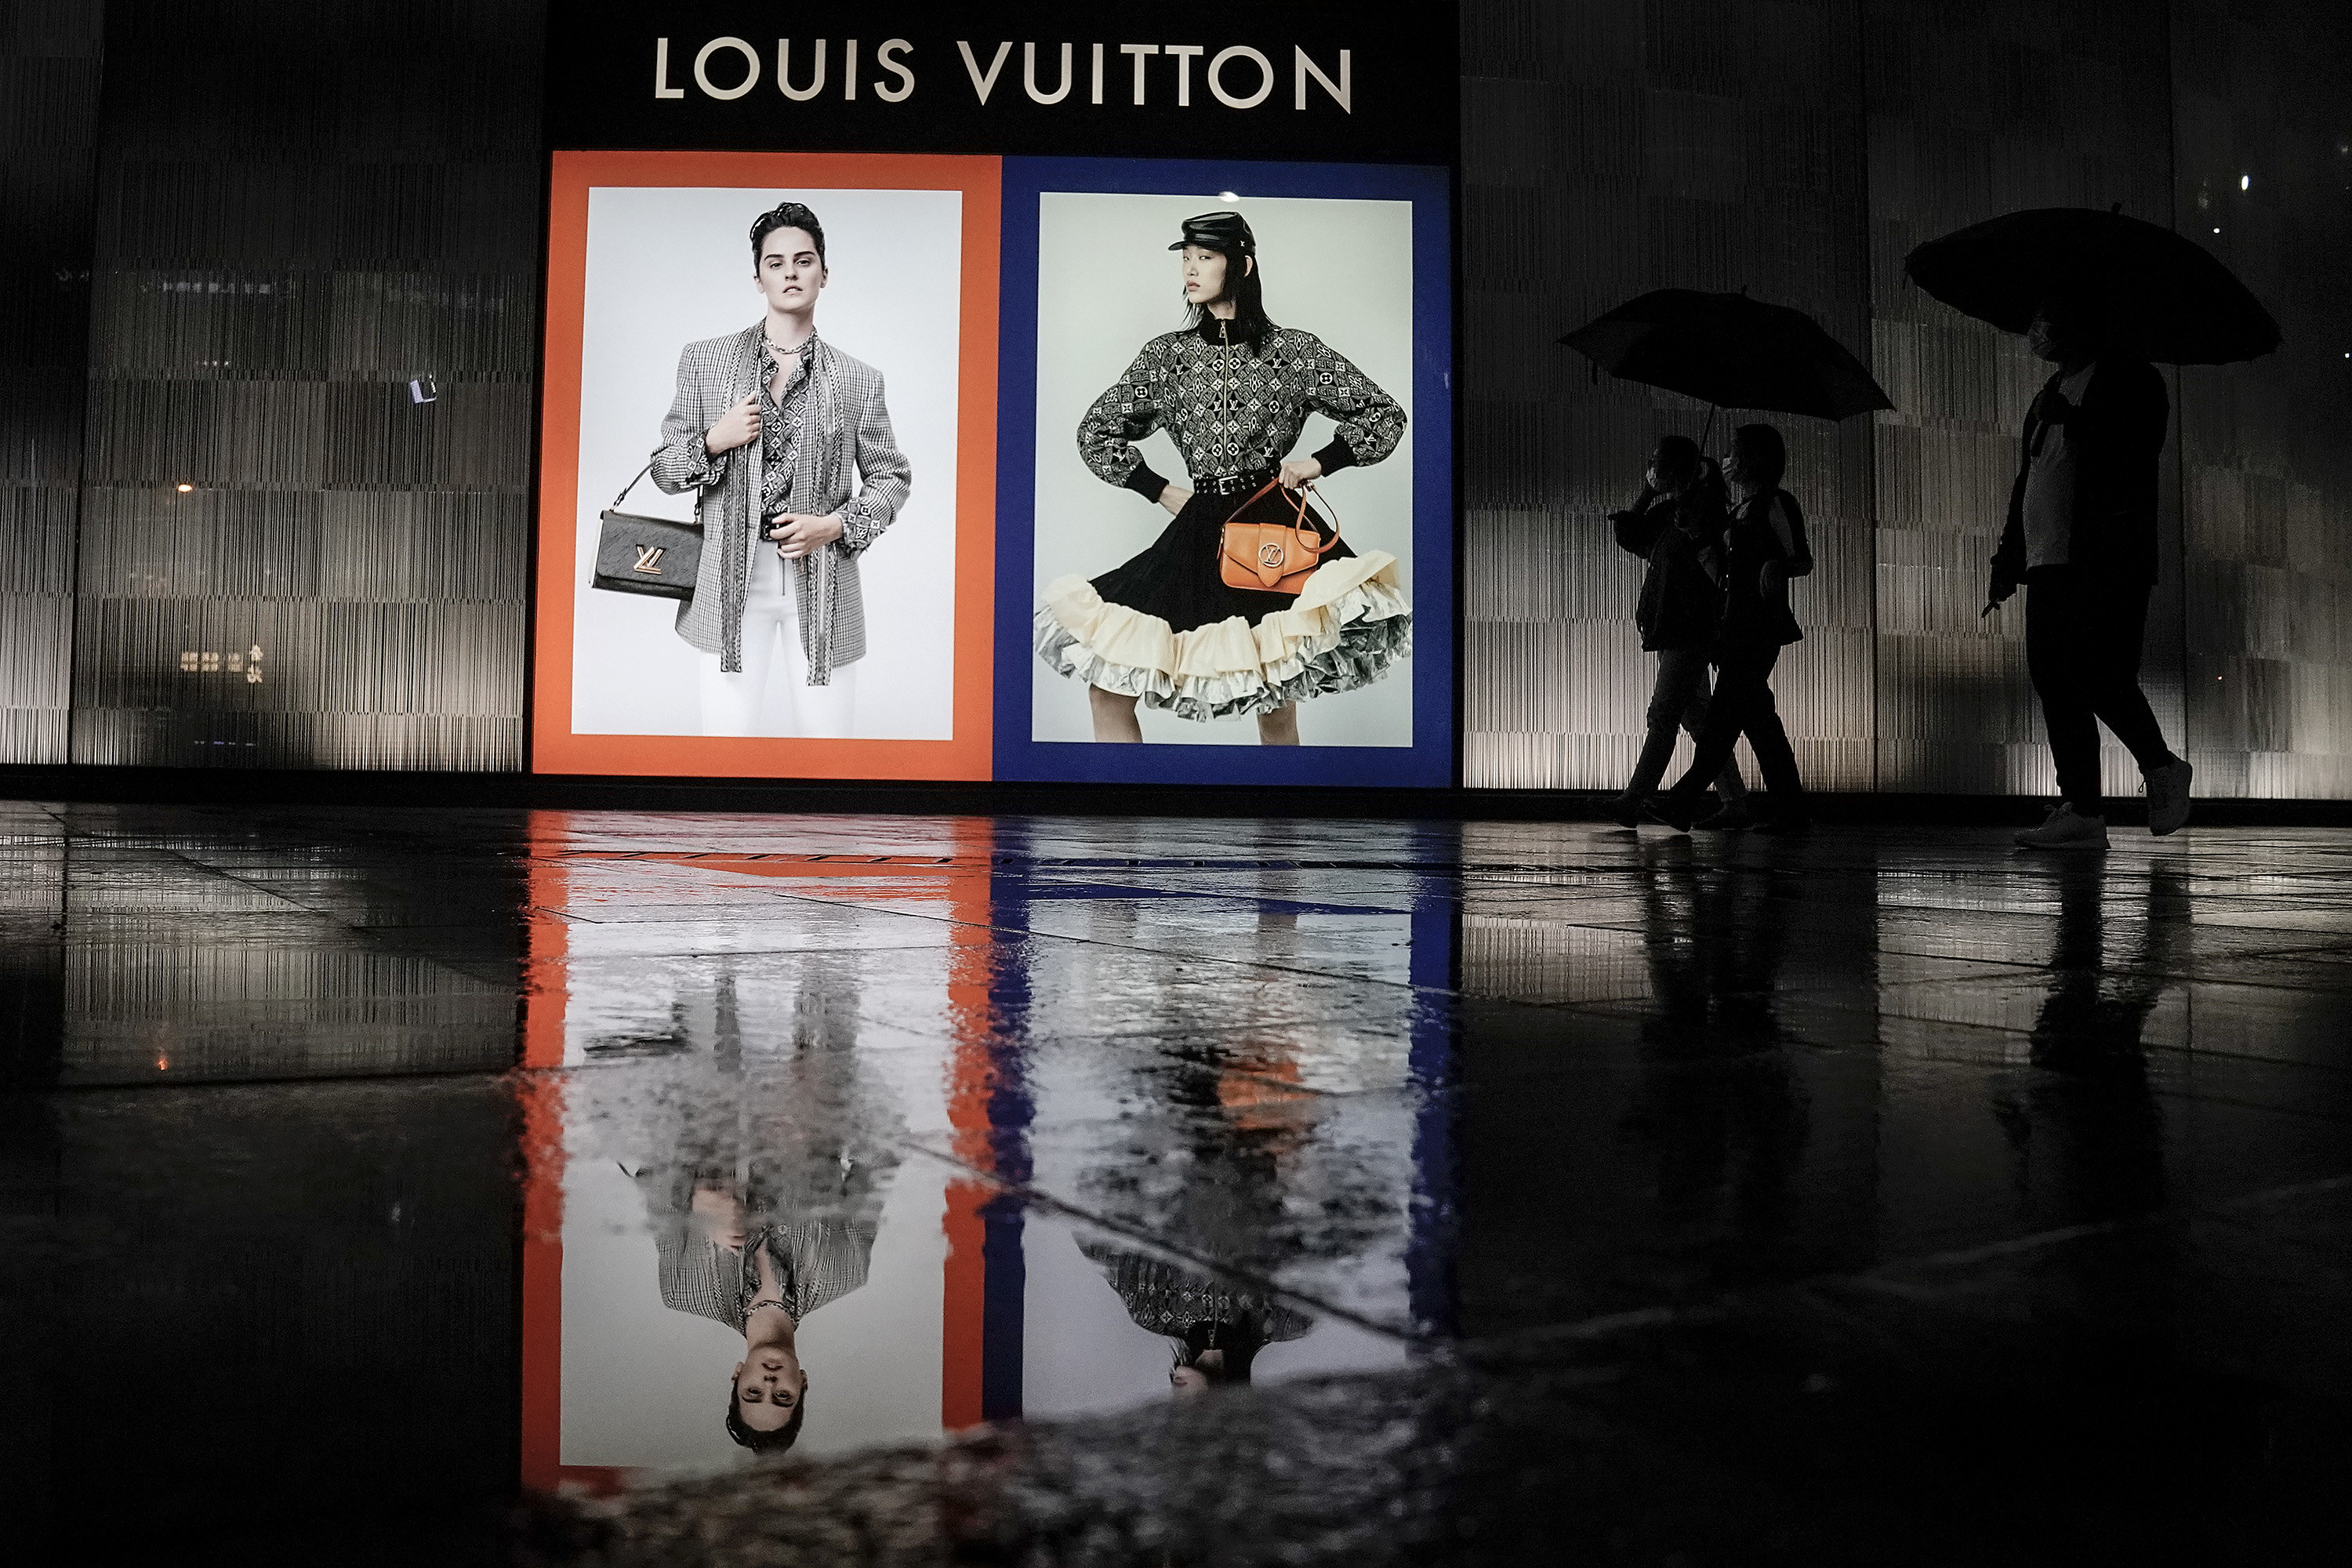 Photo of Louis Vuitton store